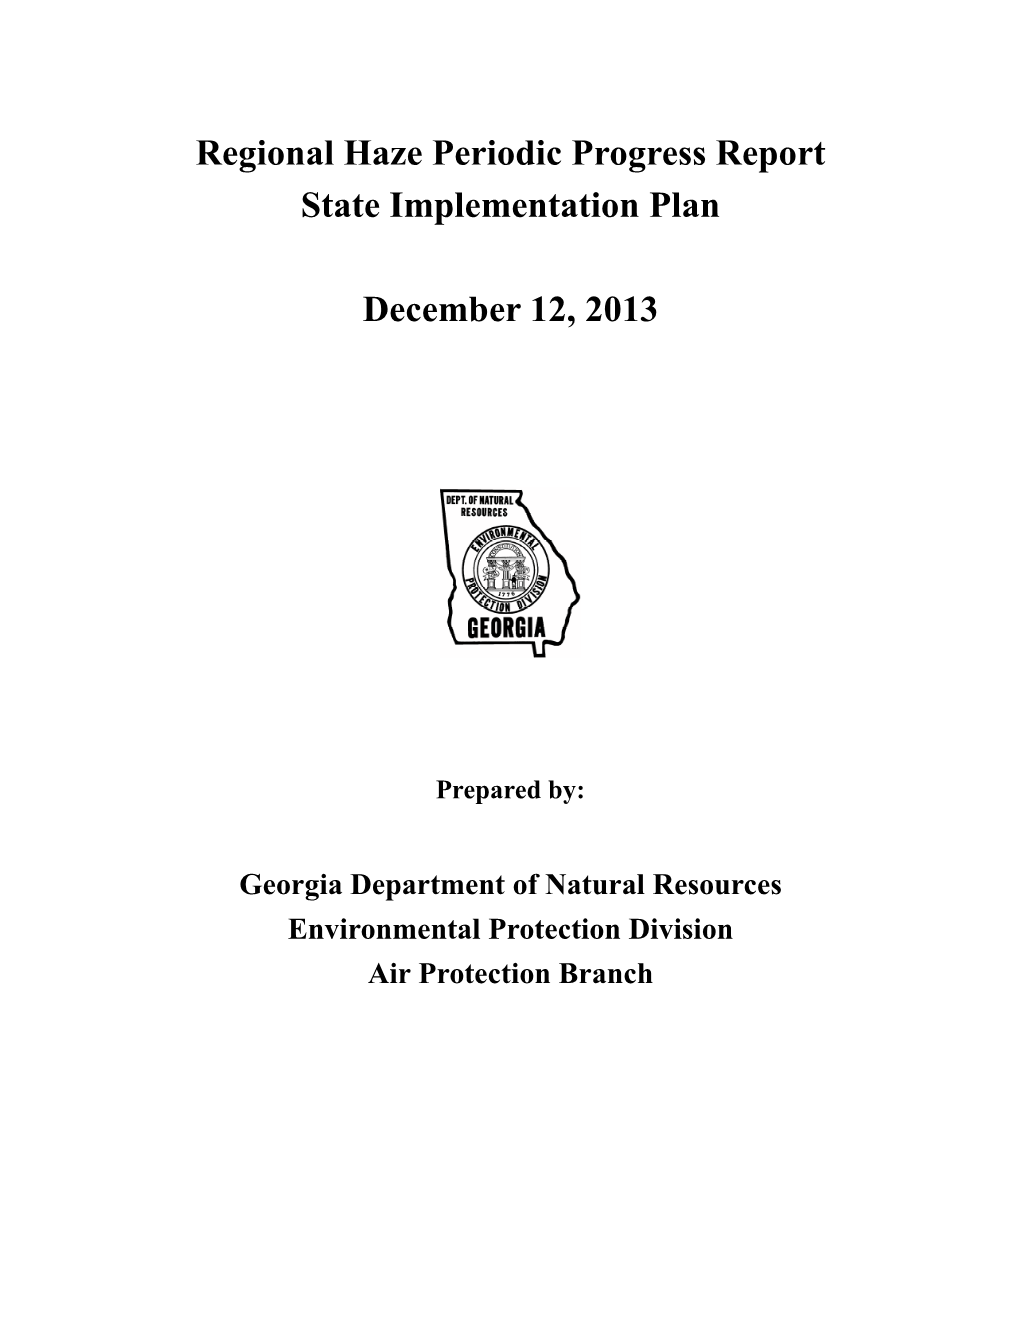 Regional Haze Periodic Progress Report State Implementation Plan